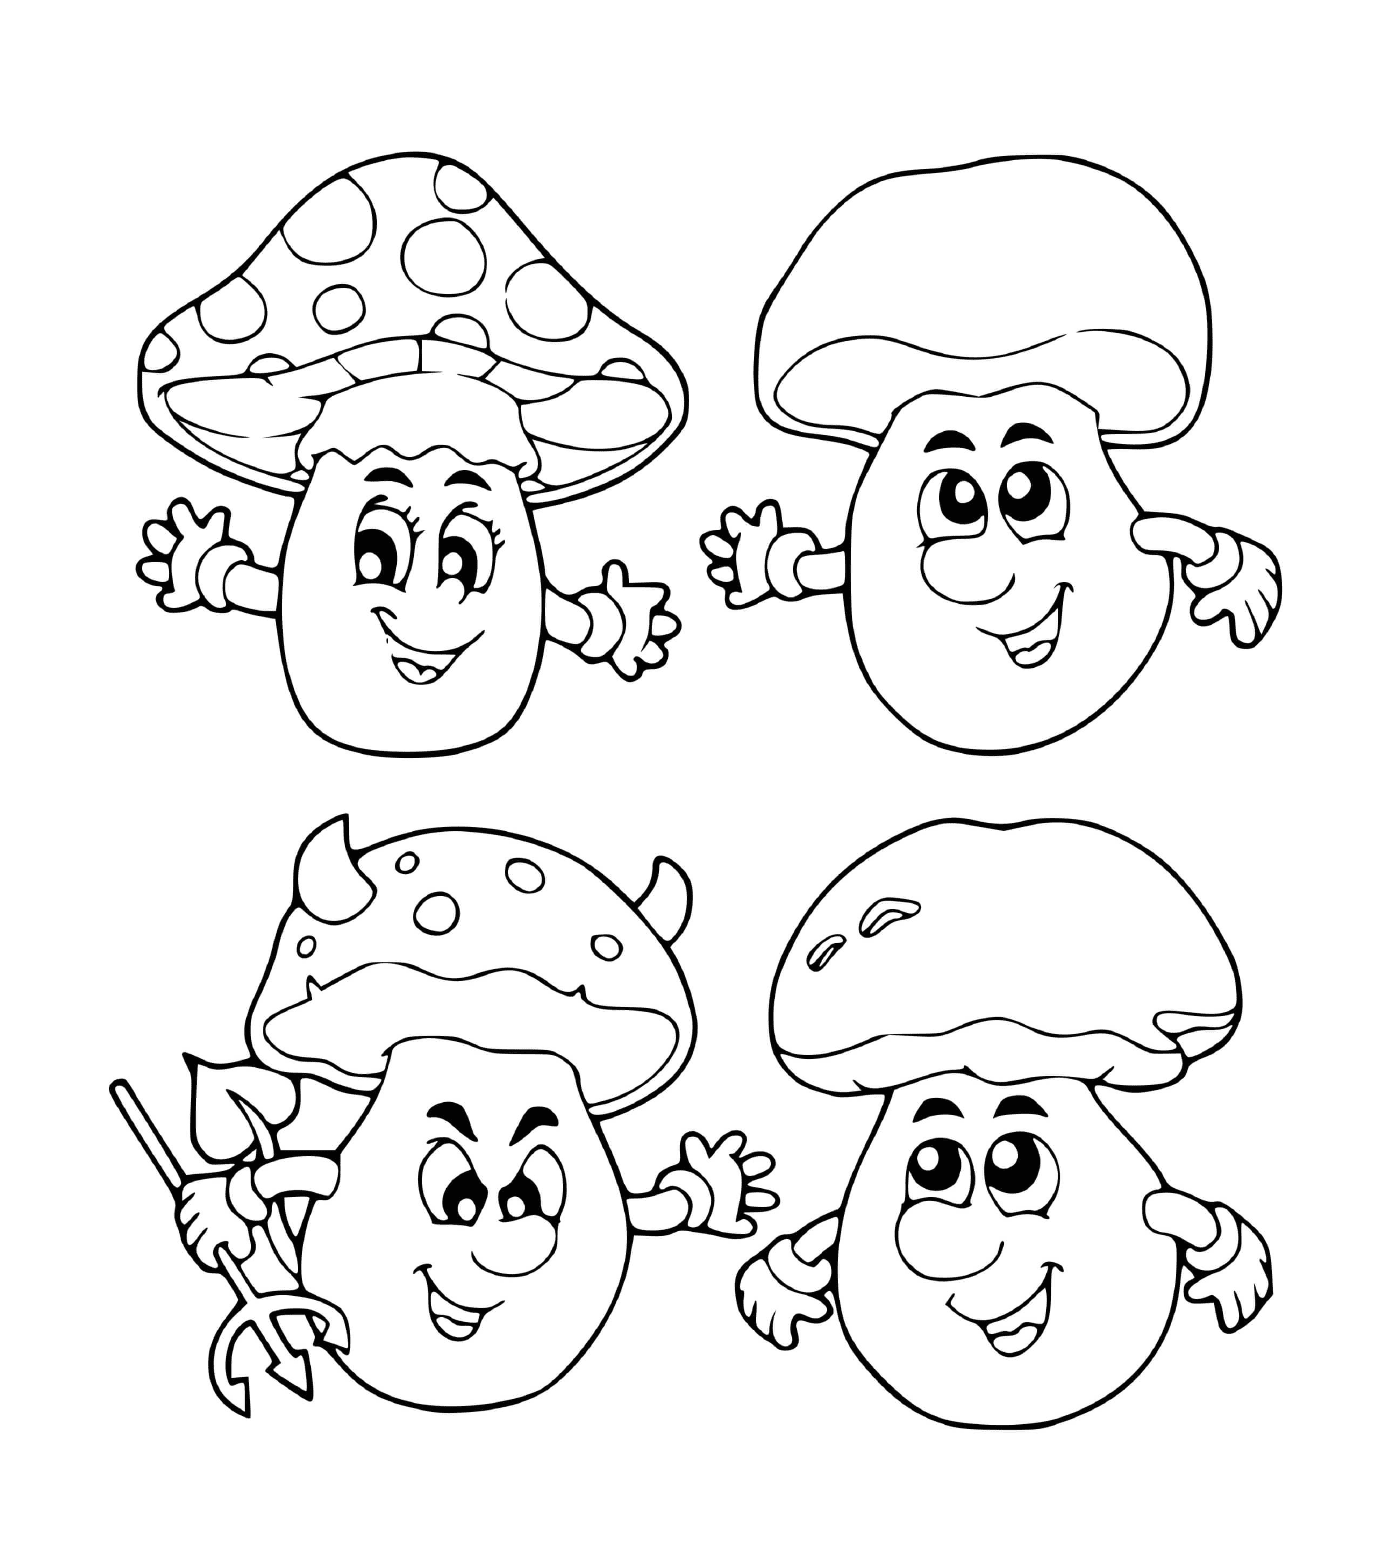  Four black and white mushrooms 